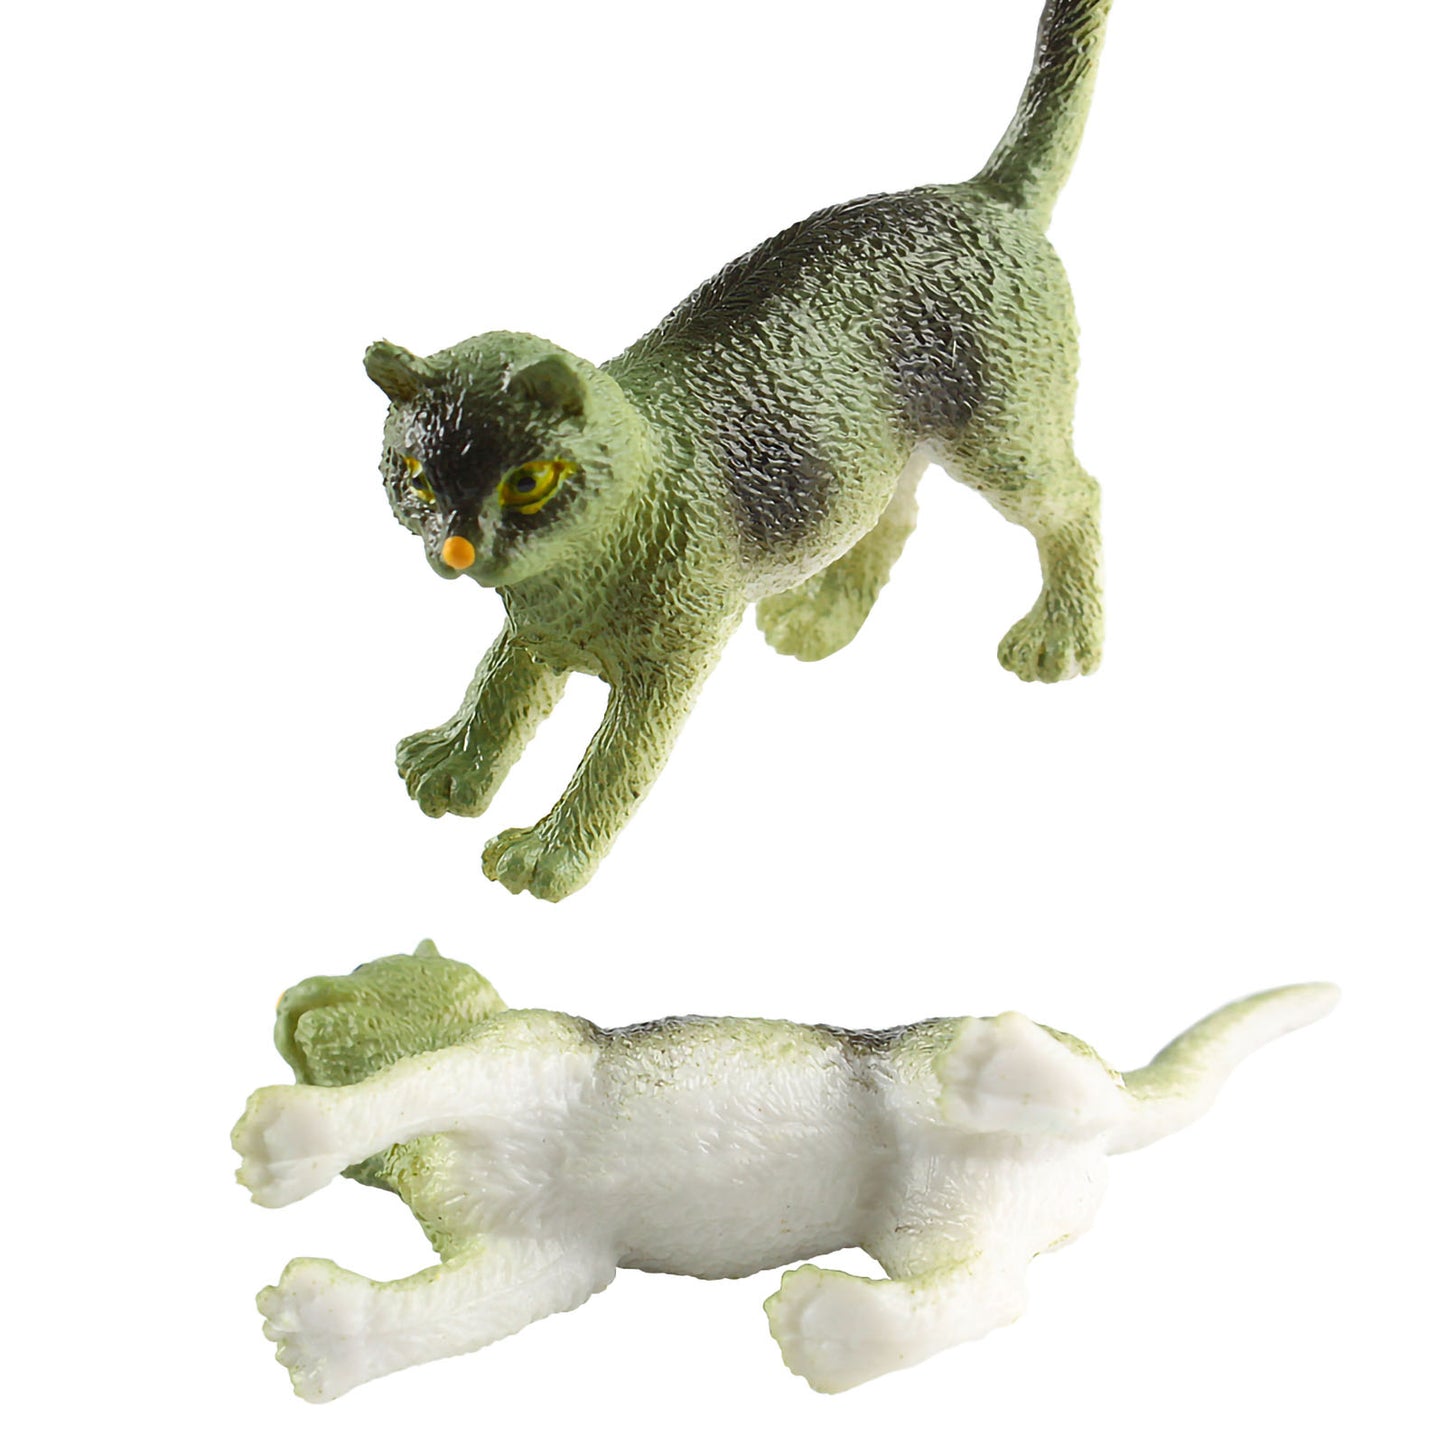 Larcele 12 Kinds Simulated Animal Model Cat Toy FZM-01 (Cat)